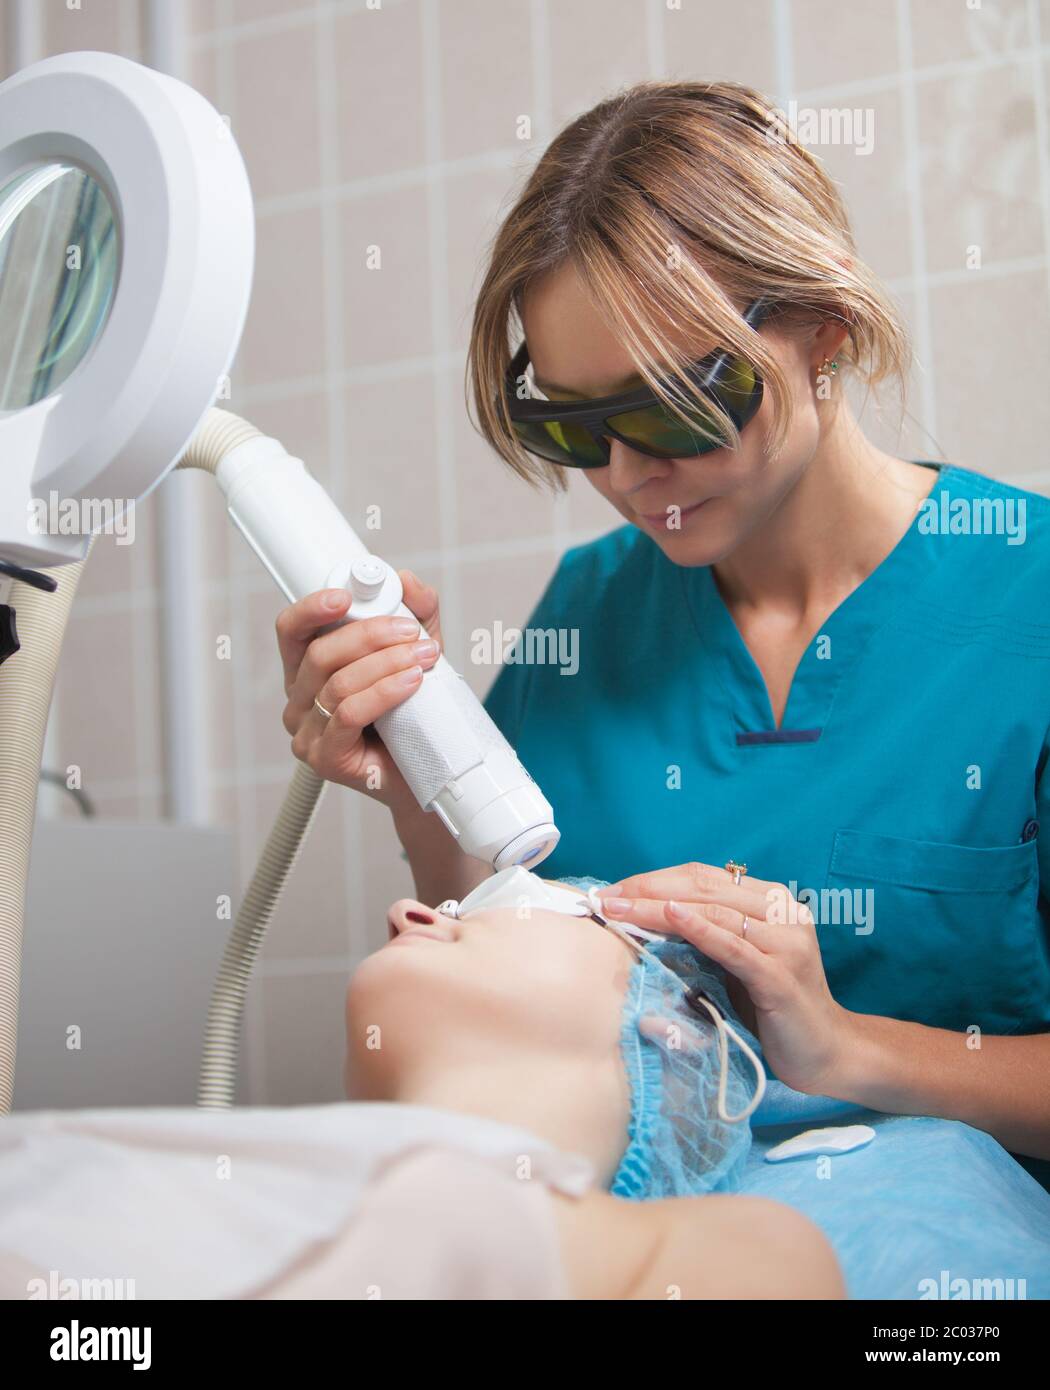 Cosmetician providing facial treatment with a laser Stock Photo